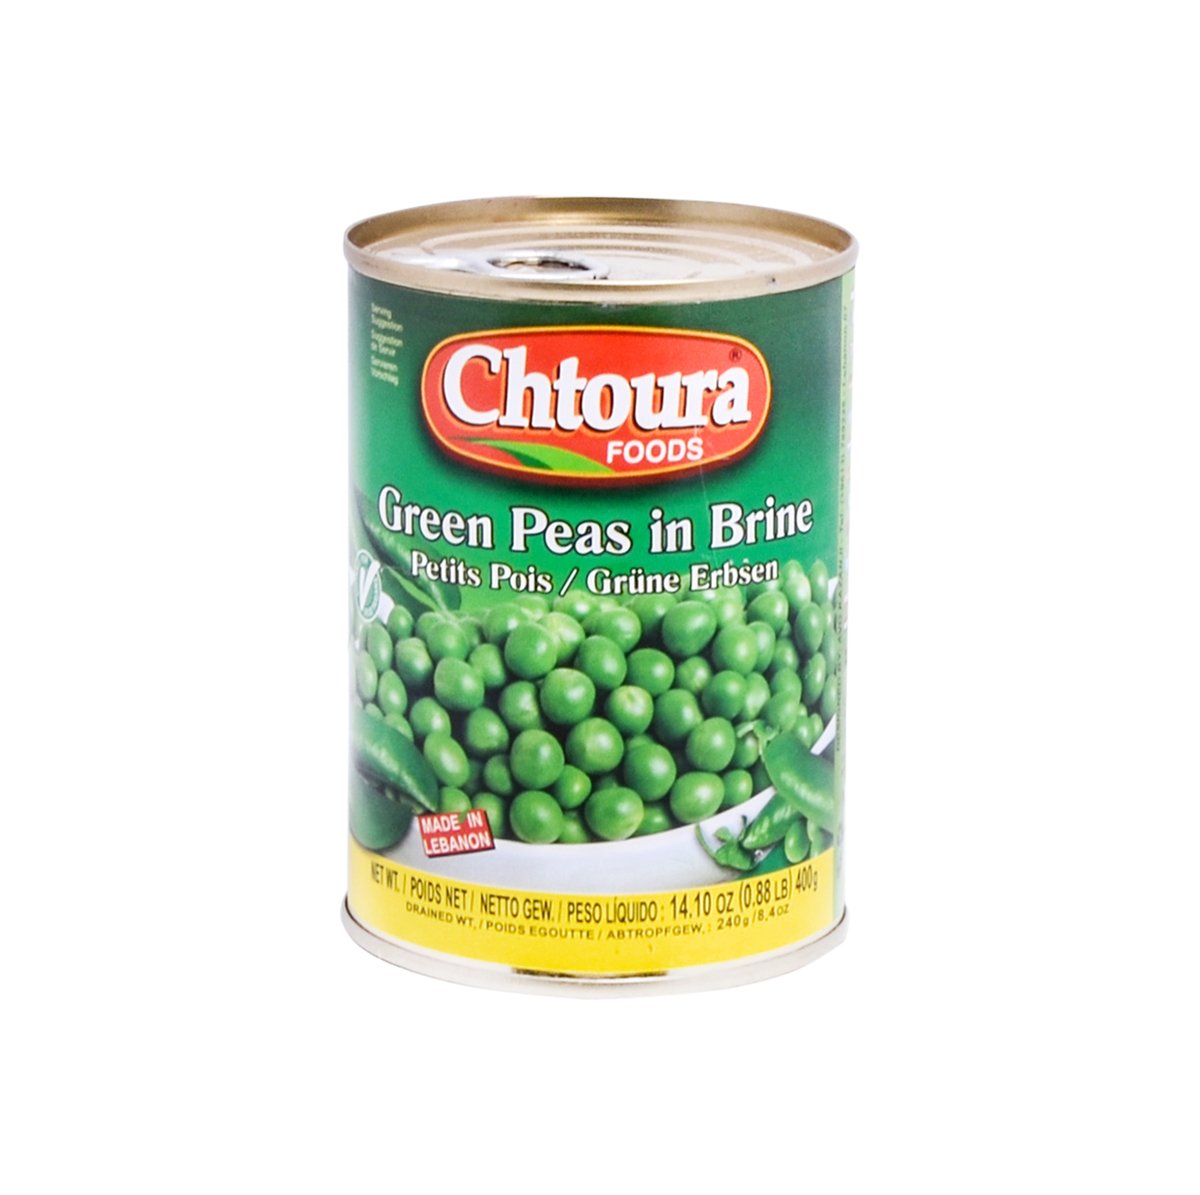 Chtoura Foods Chtoura Food Green Peas in Brine 400g